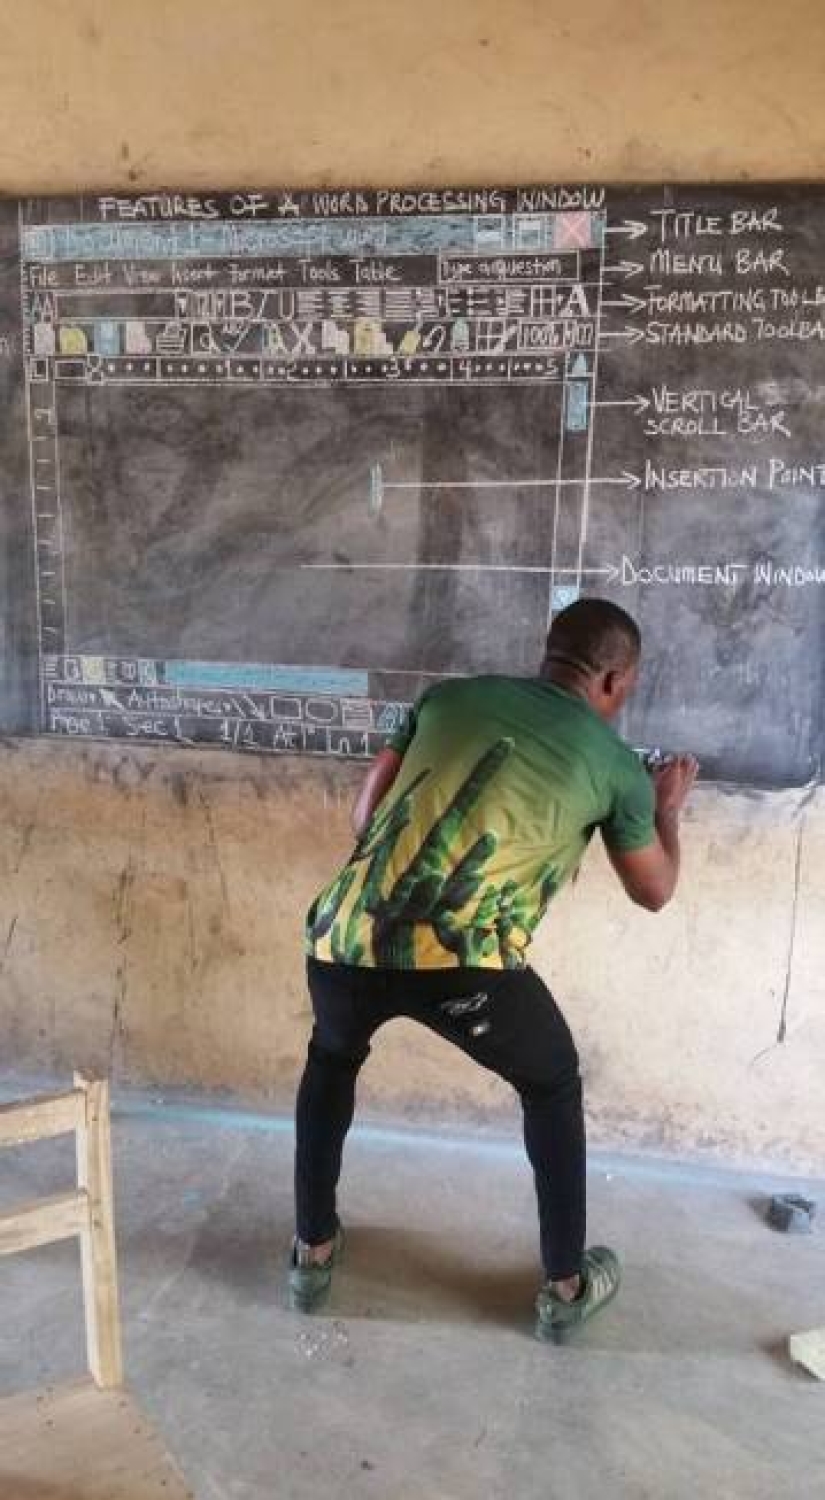 Microsoft Word, blackboard, chalk: photo of a computer science teacher at a village school in Ghana flew around social networks